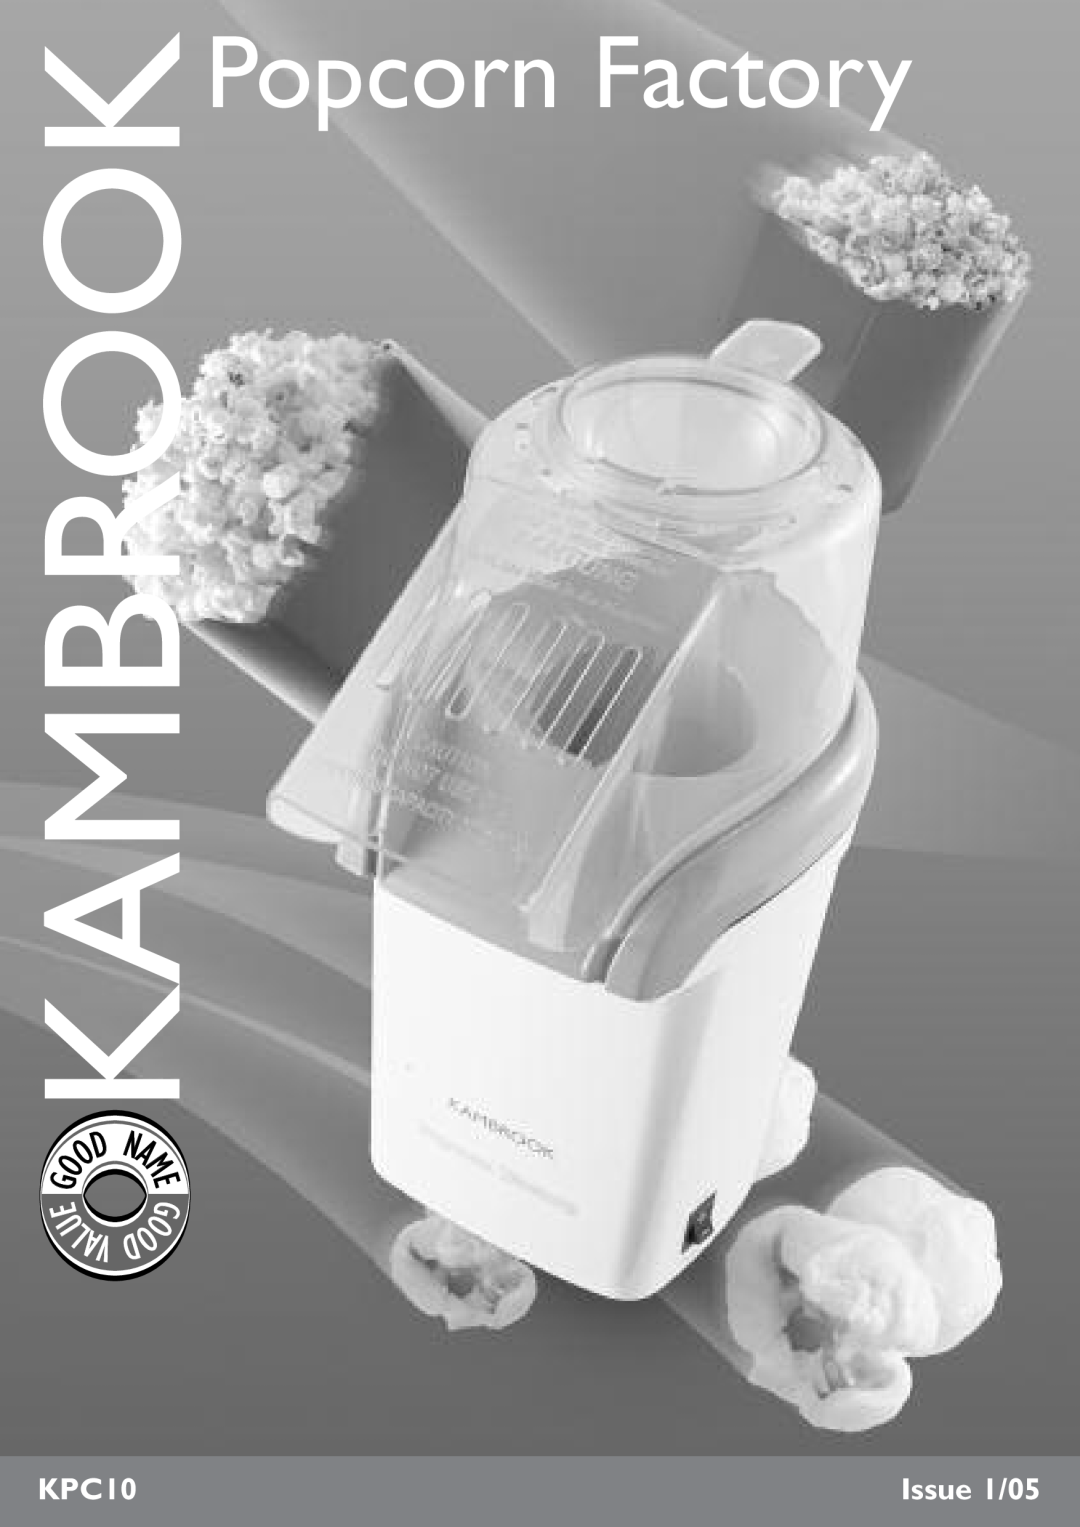 Kambrook KPC10 manual U Lav, Popcorn Factory, Issue 1/05 